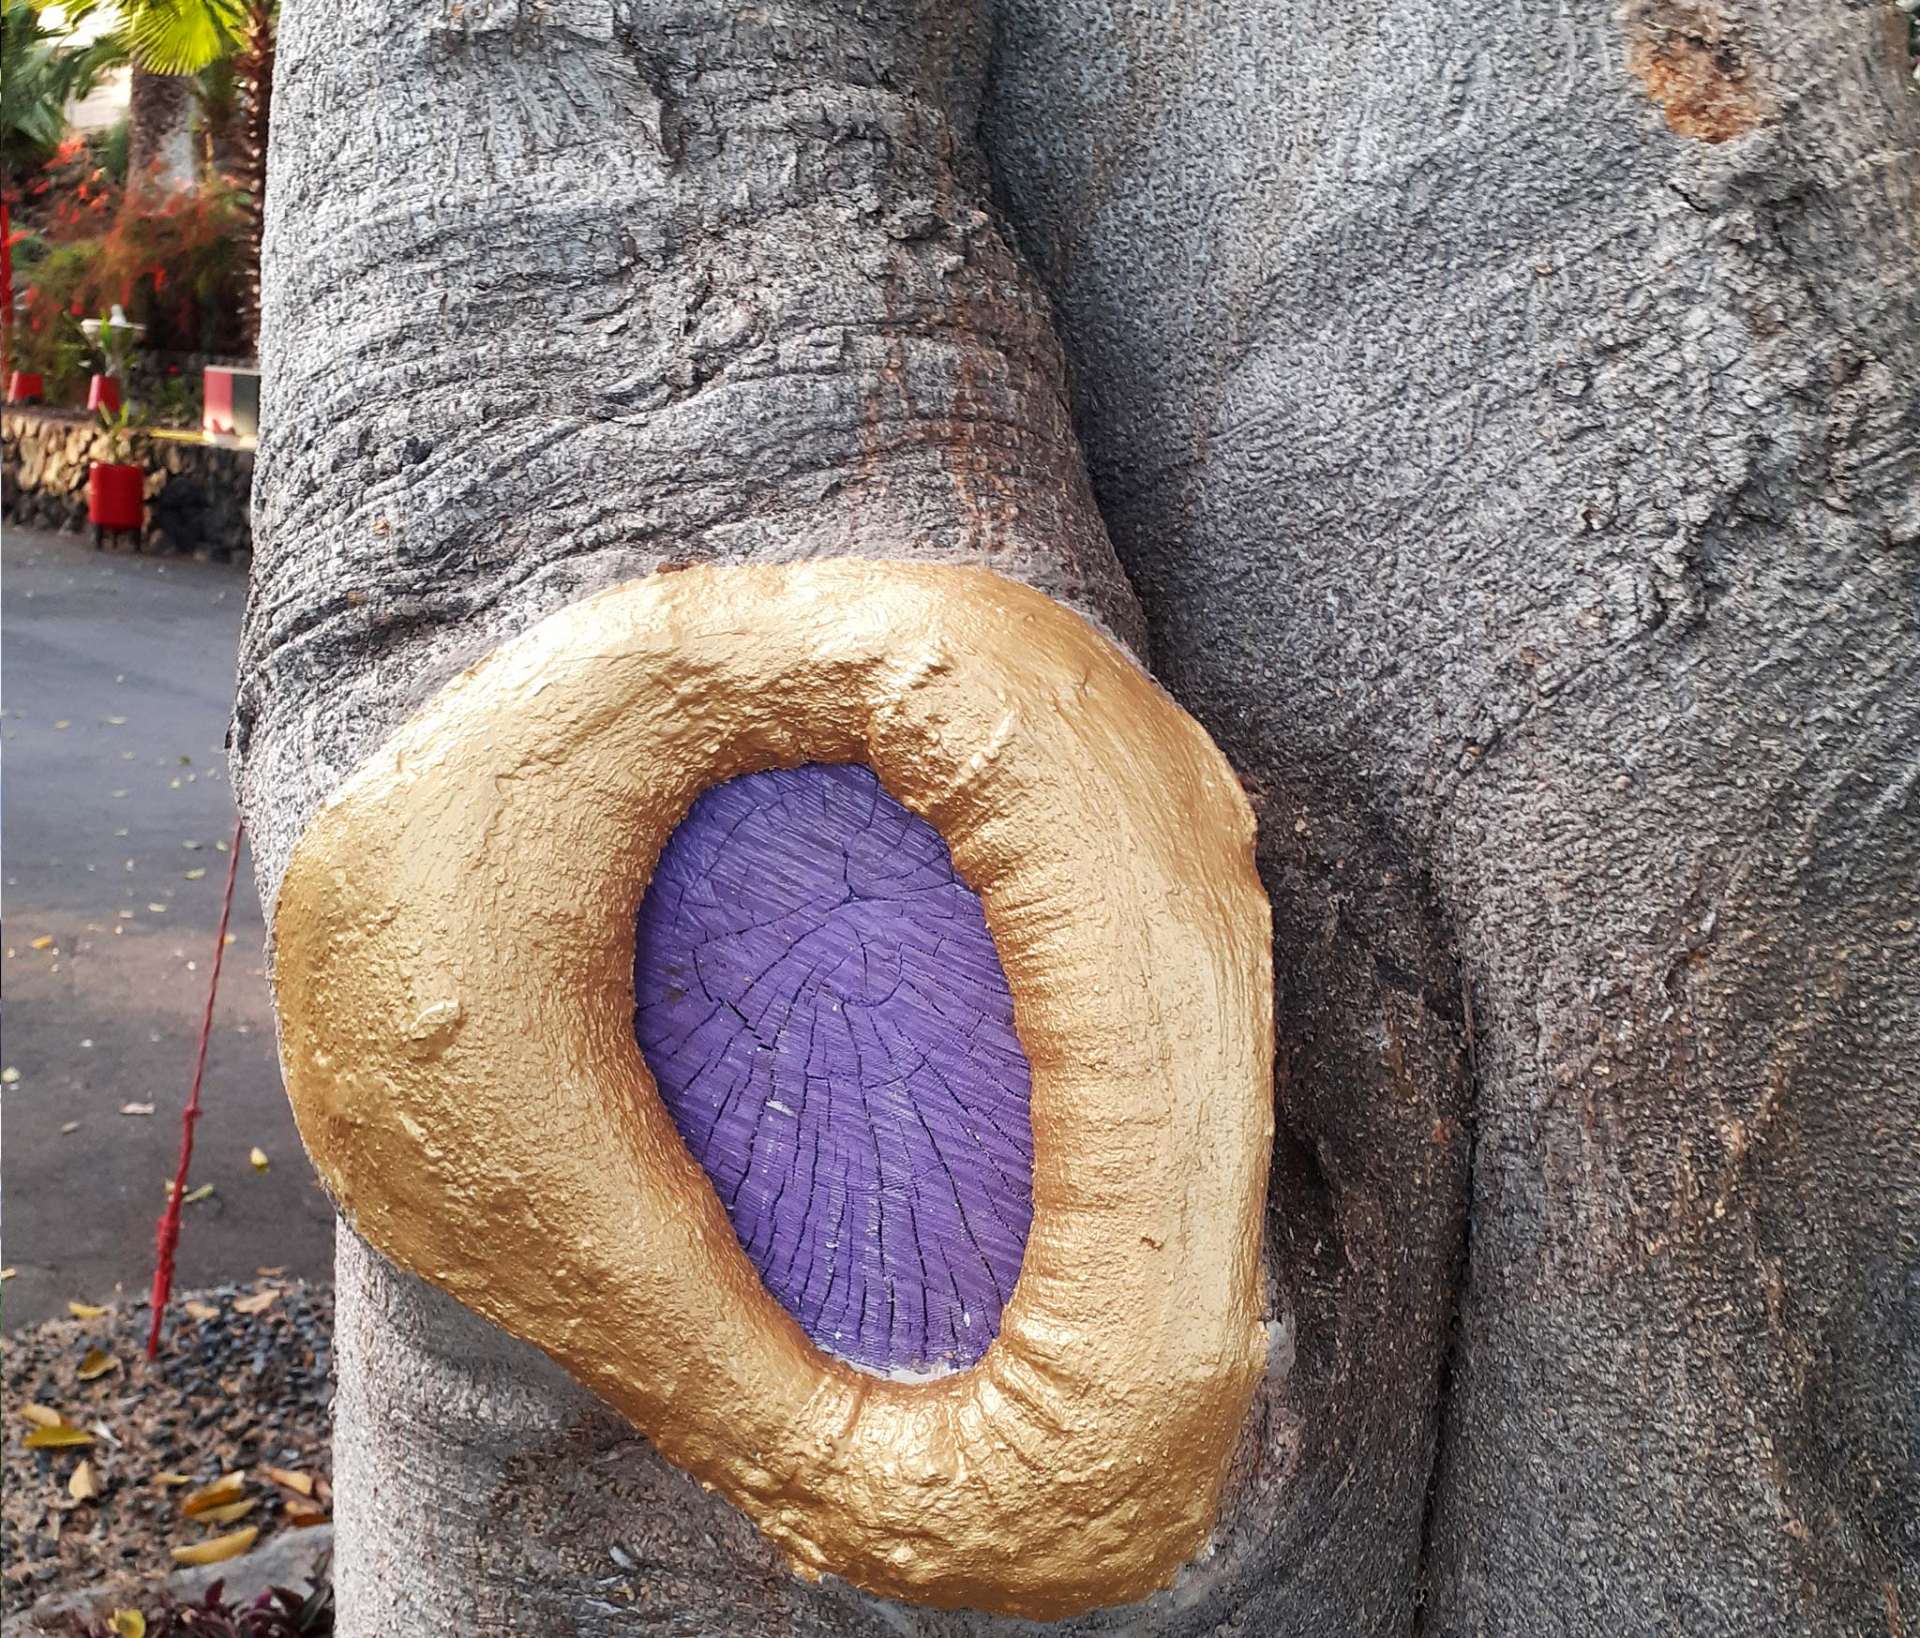 Finca Las Damas: Art in trees